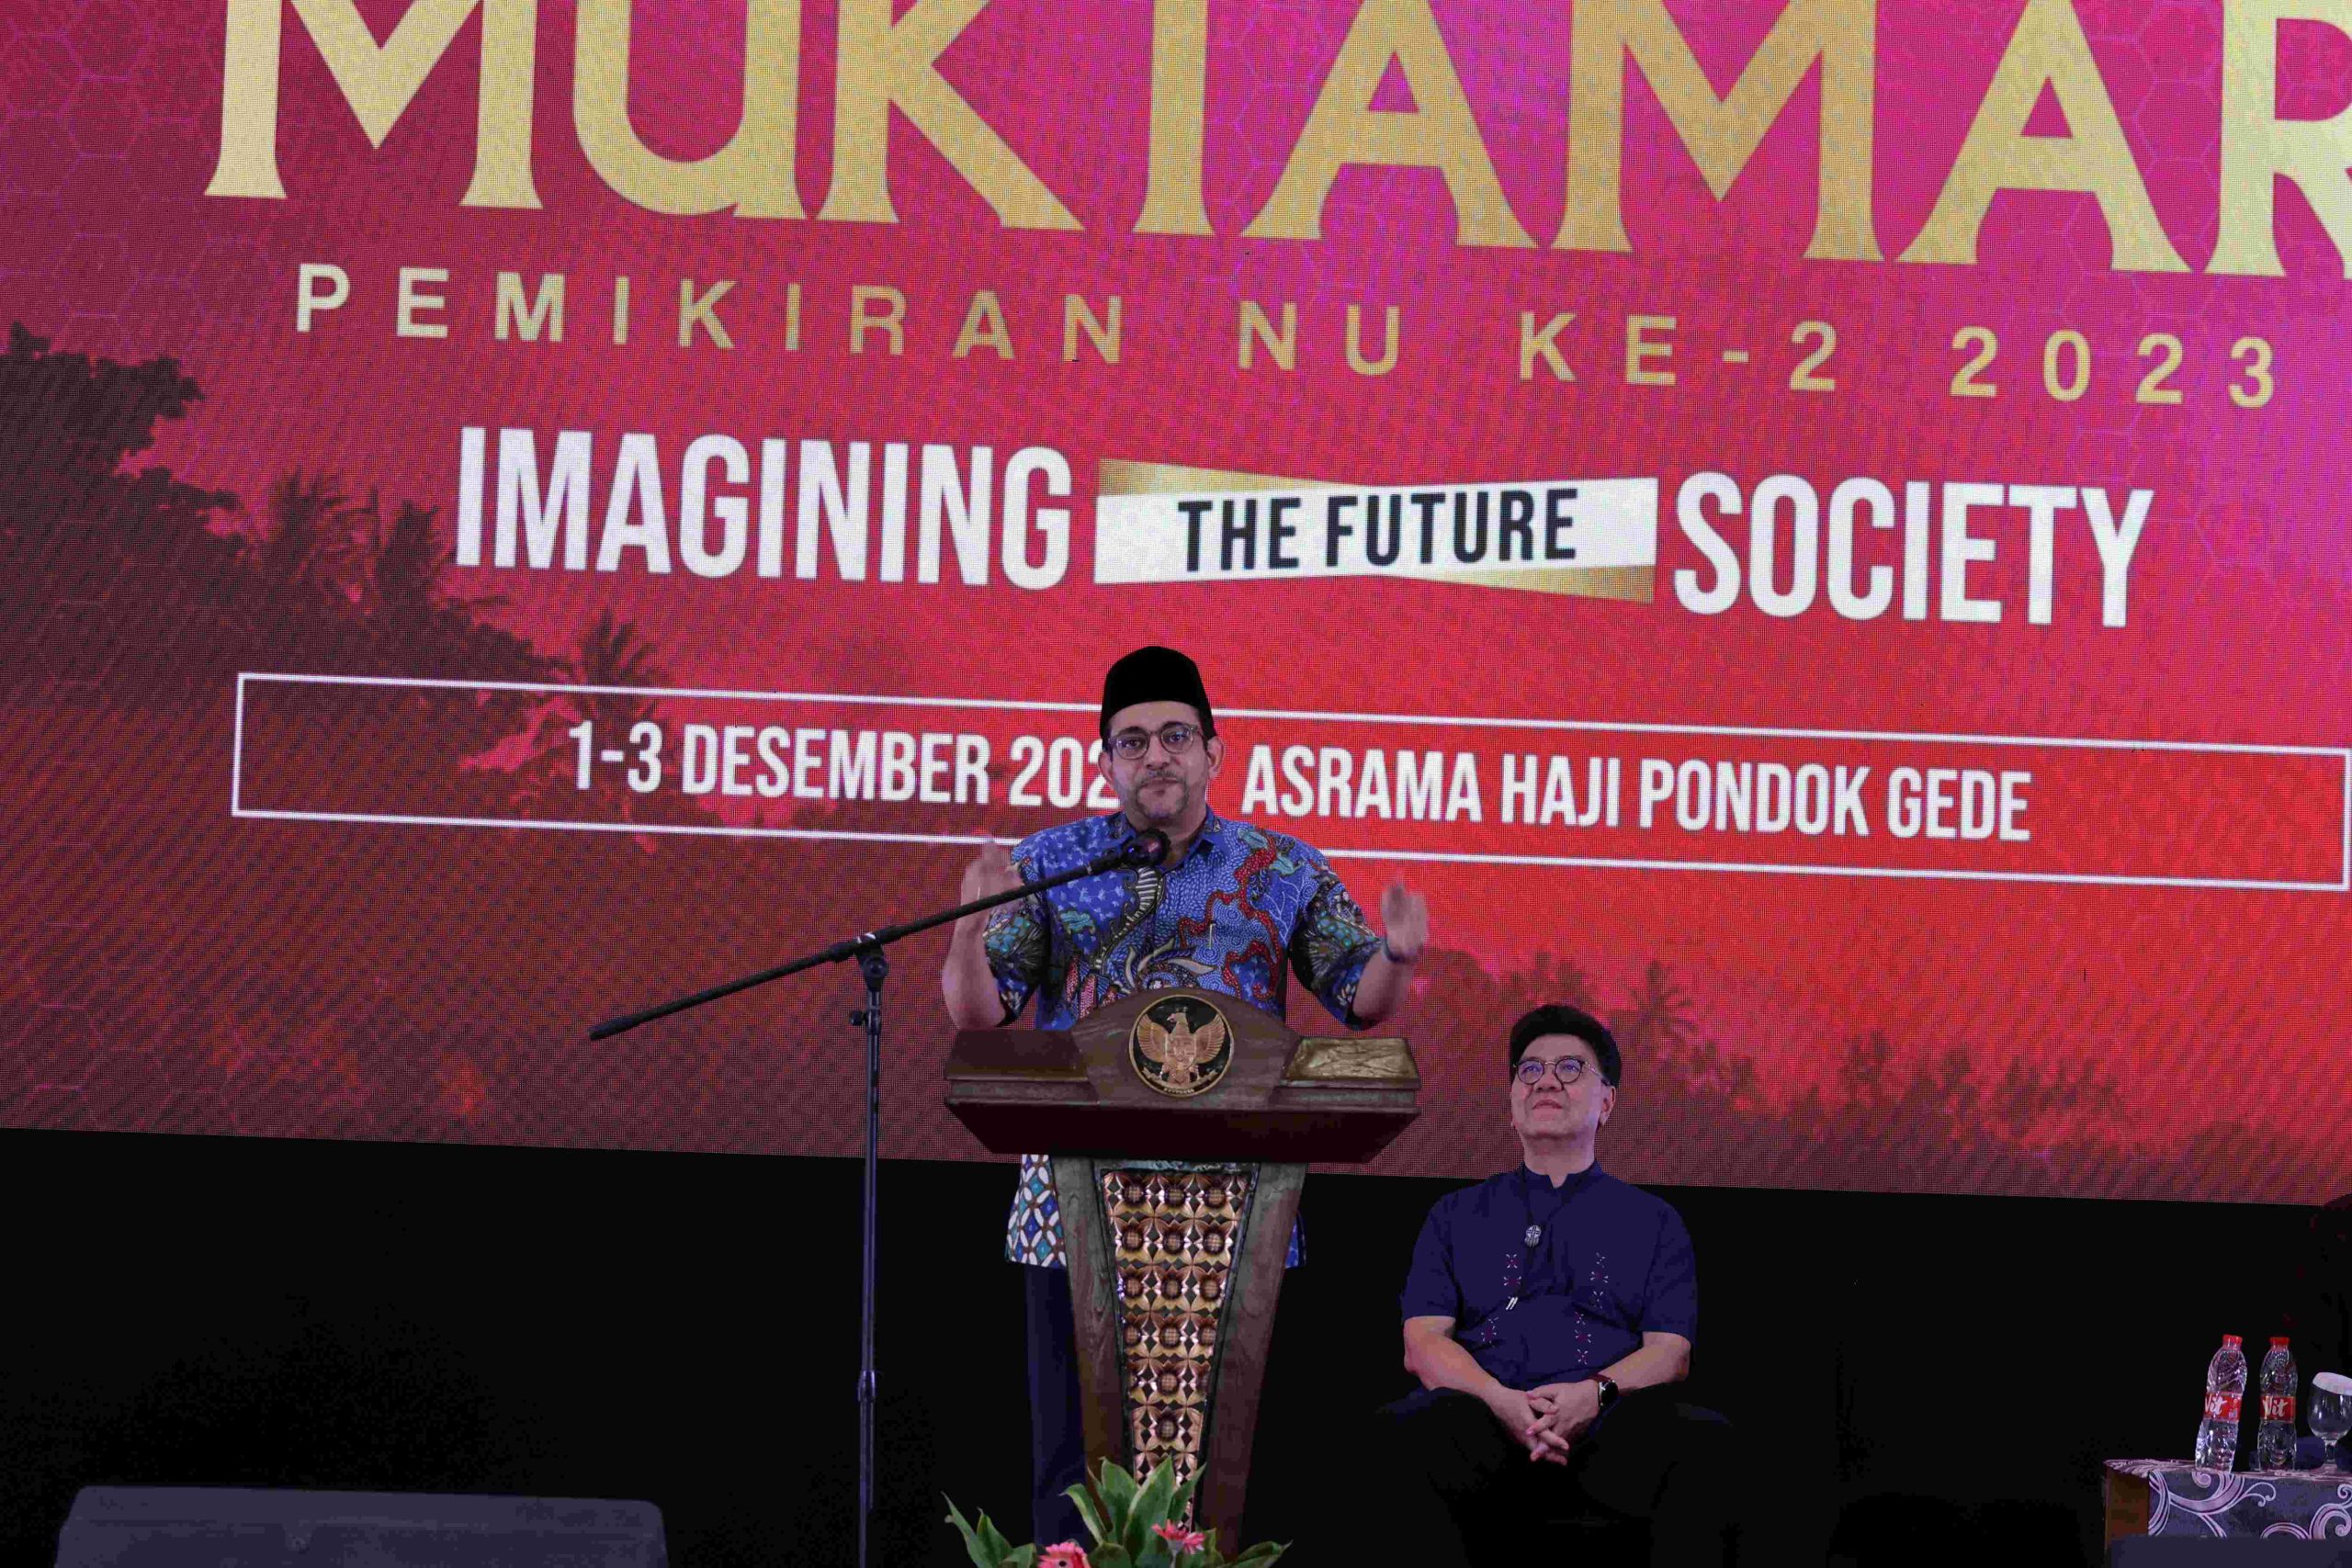 Ismail Fajrie Alatas Muktamar Pemikiran NU 2023